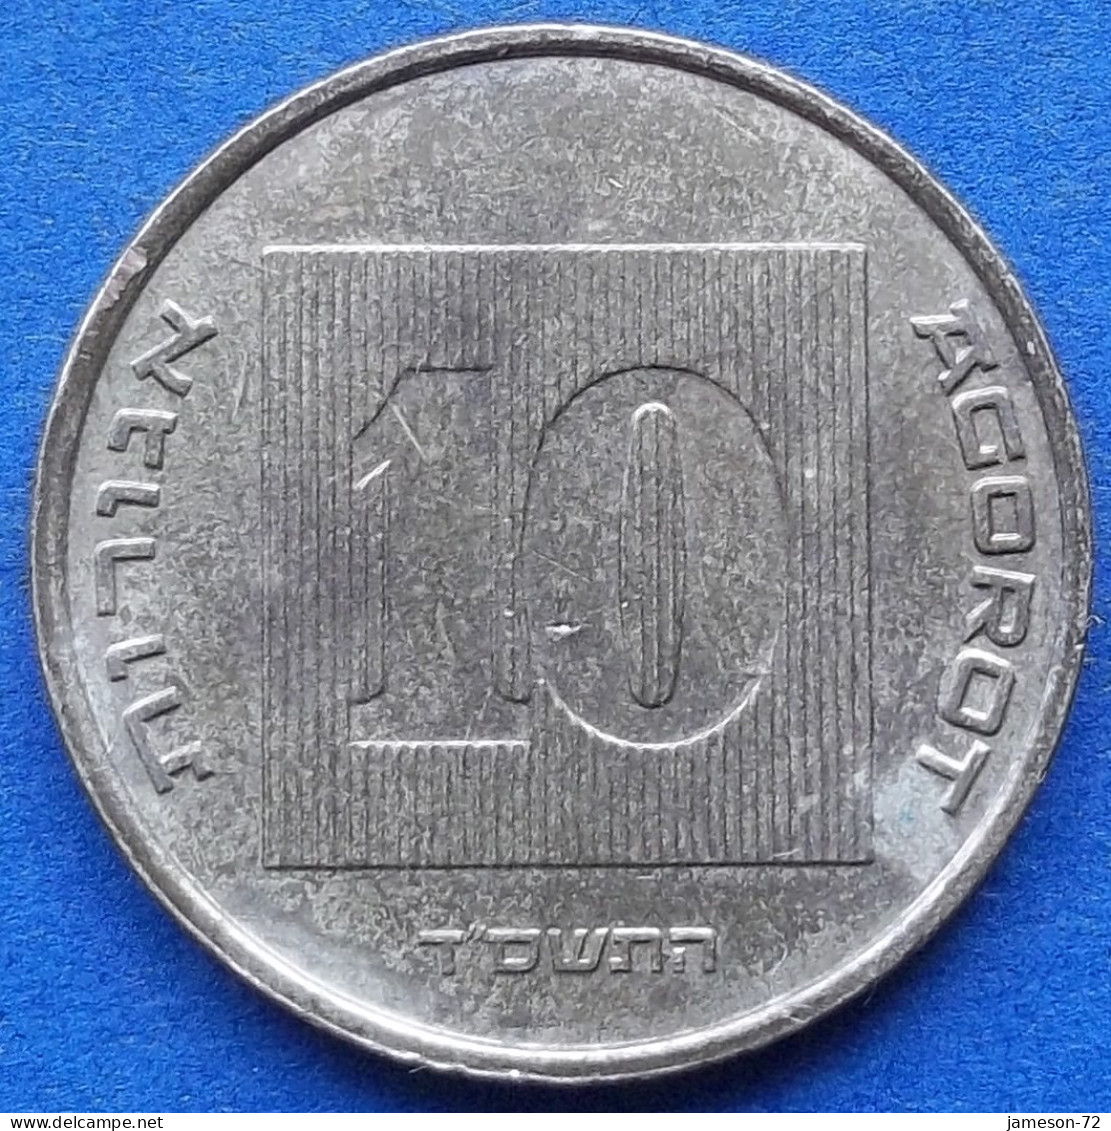 ISRAEL - 10 Agorot JE 5764 (2004AD) "Menorah" KM# 158 Monetary Reform (1985) - Edelweiss Coins - Israel